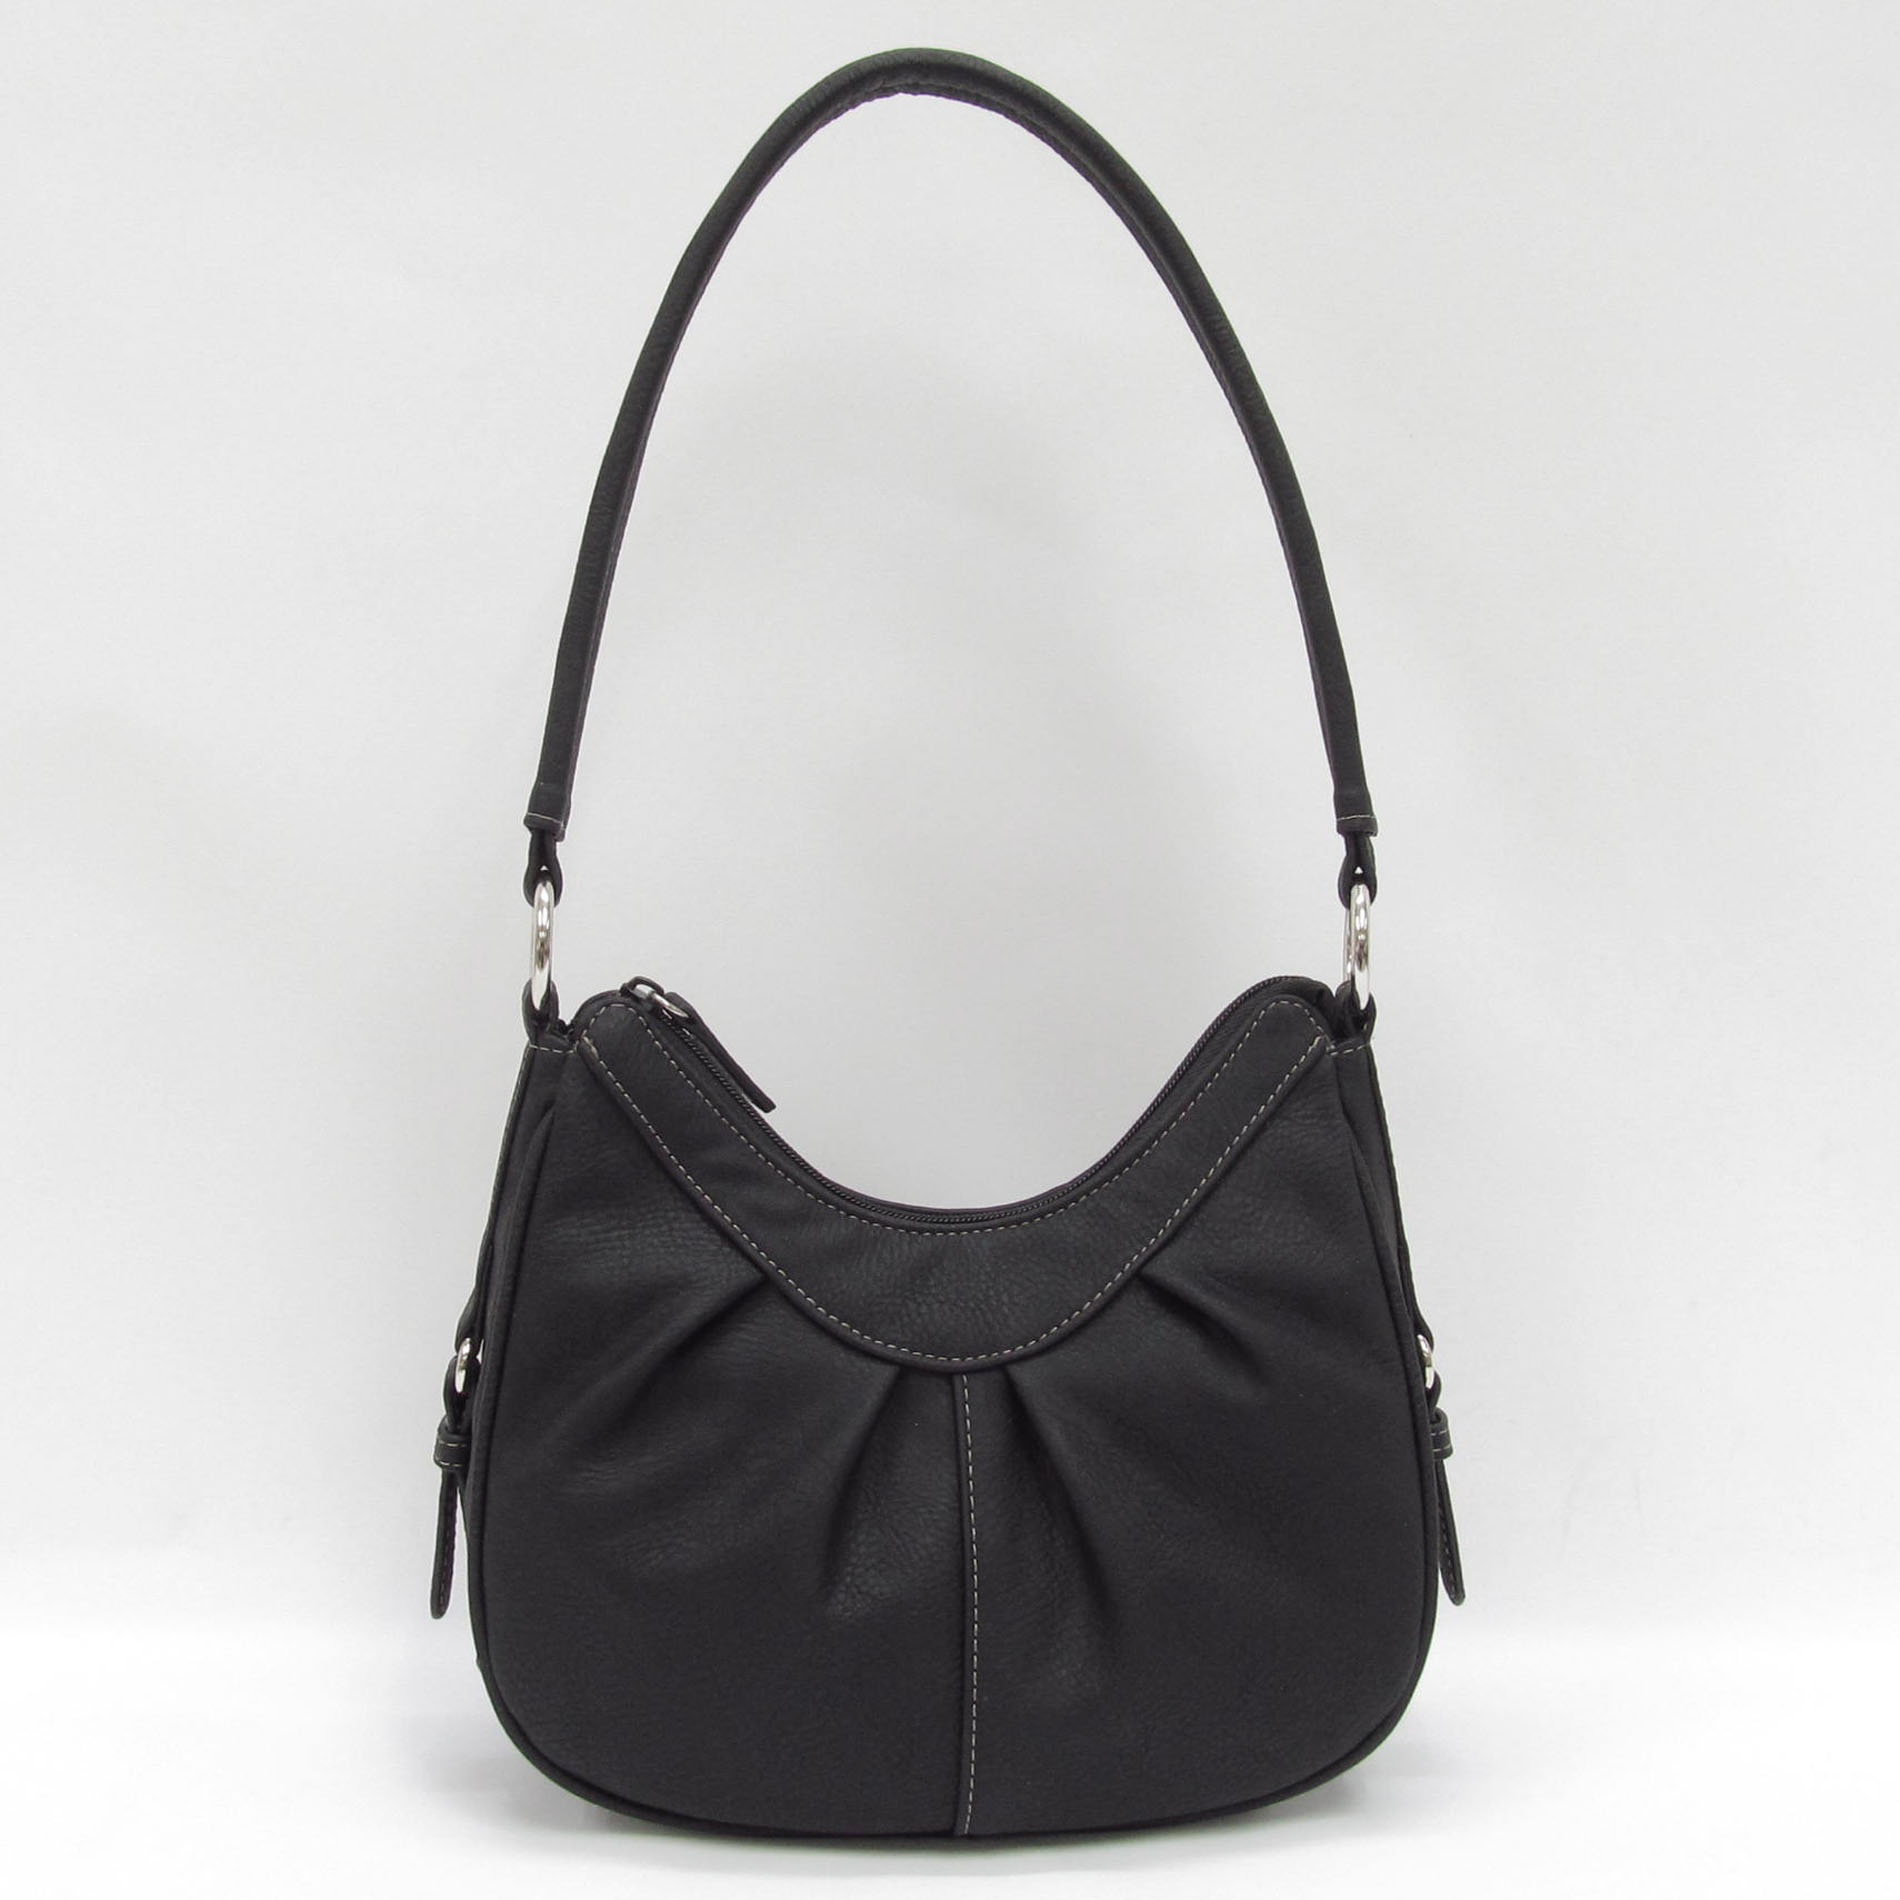 Laura Scott Women's Hobo Handbag - Faux Leather